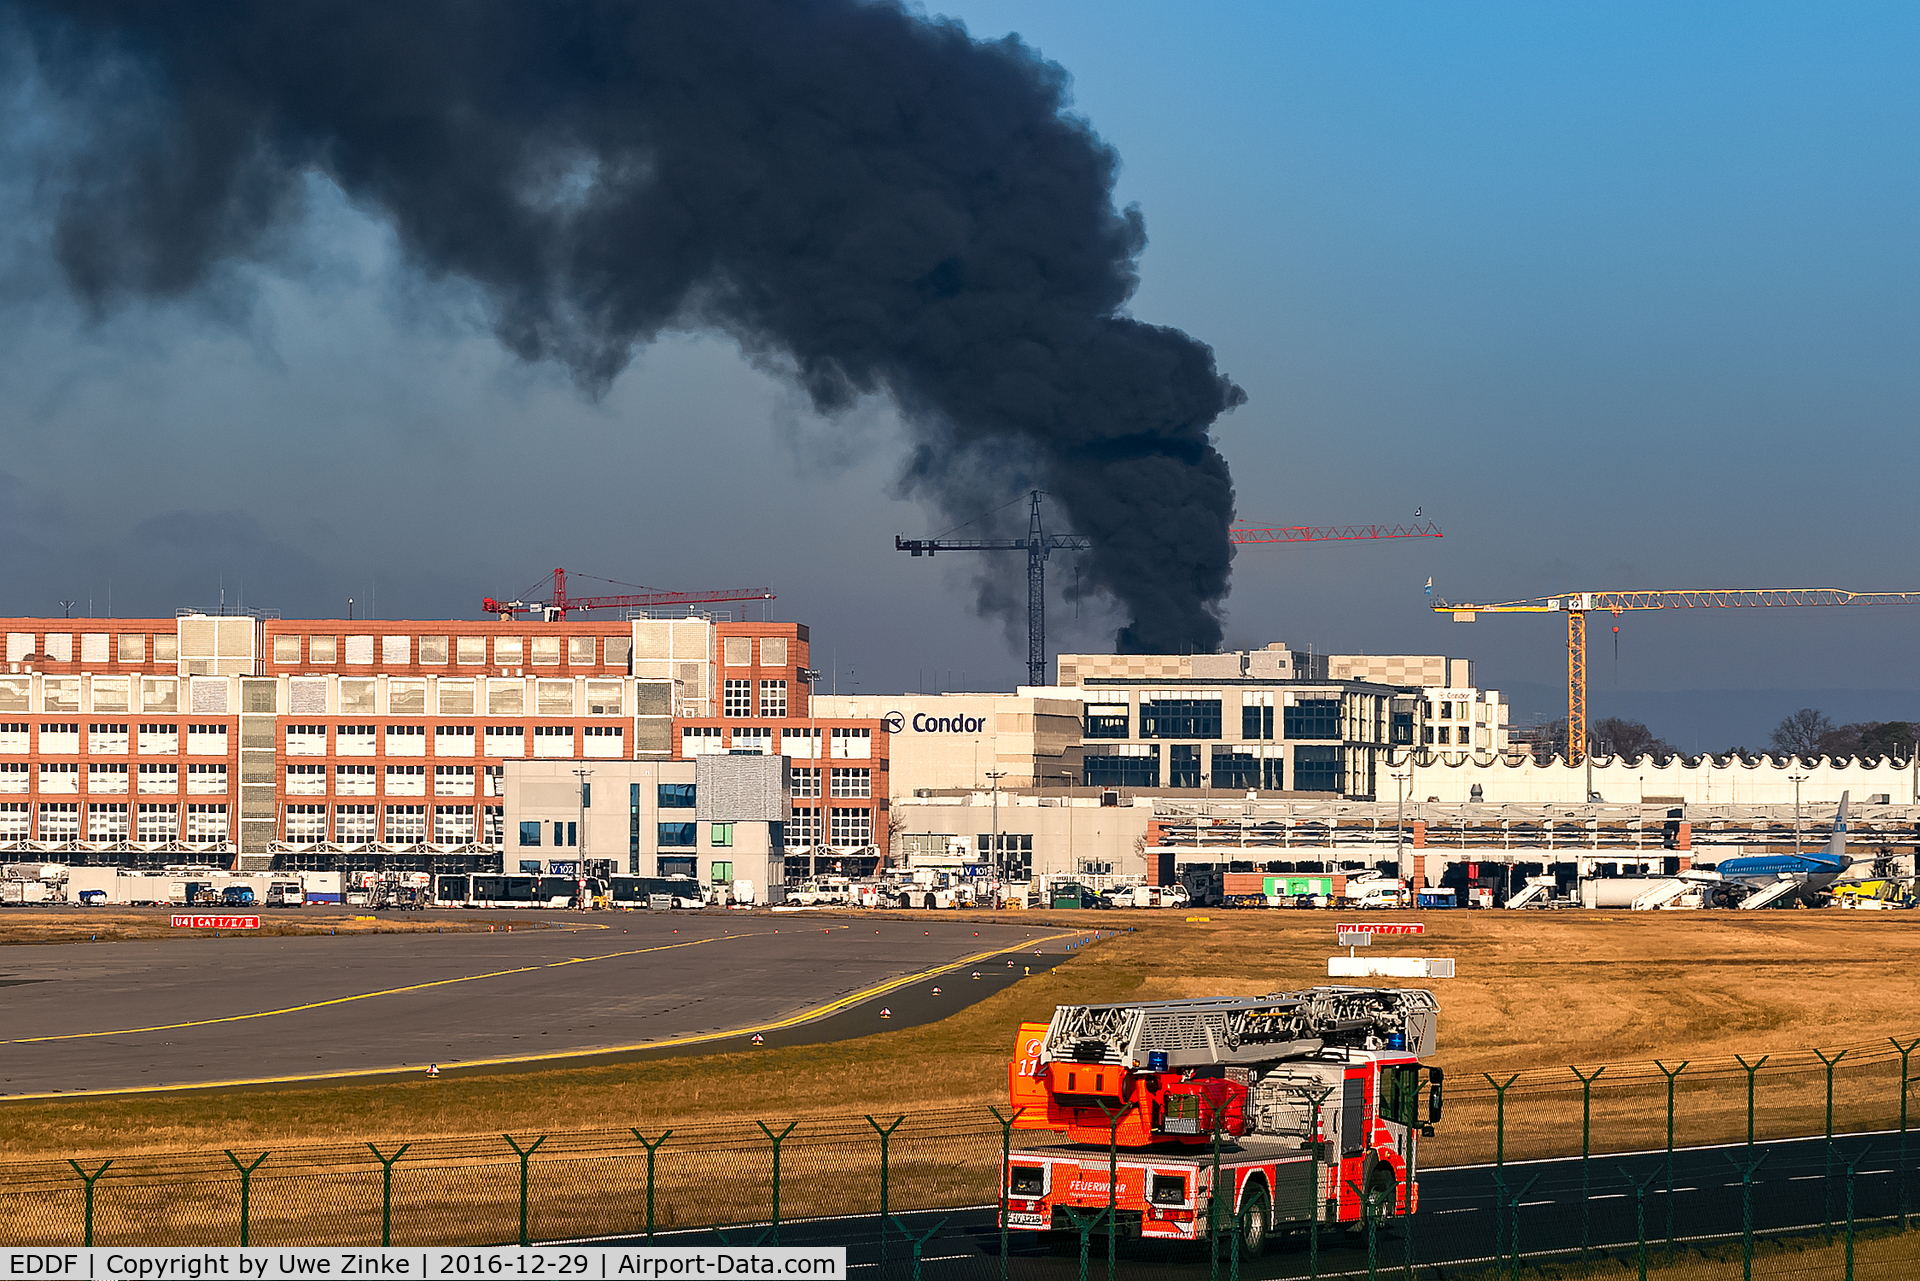 Frankfurt International Airport, Frankfurt am Main Germany (EDDF) - A Condor cabin simulator was burning down. Nobody was injured!!!